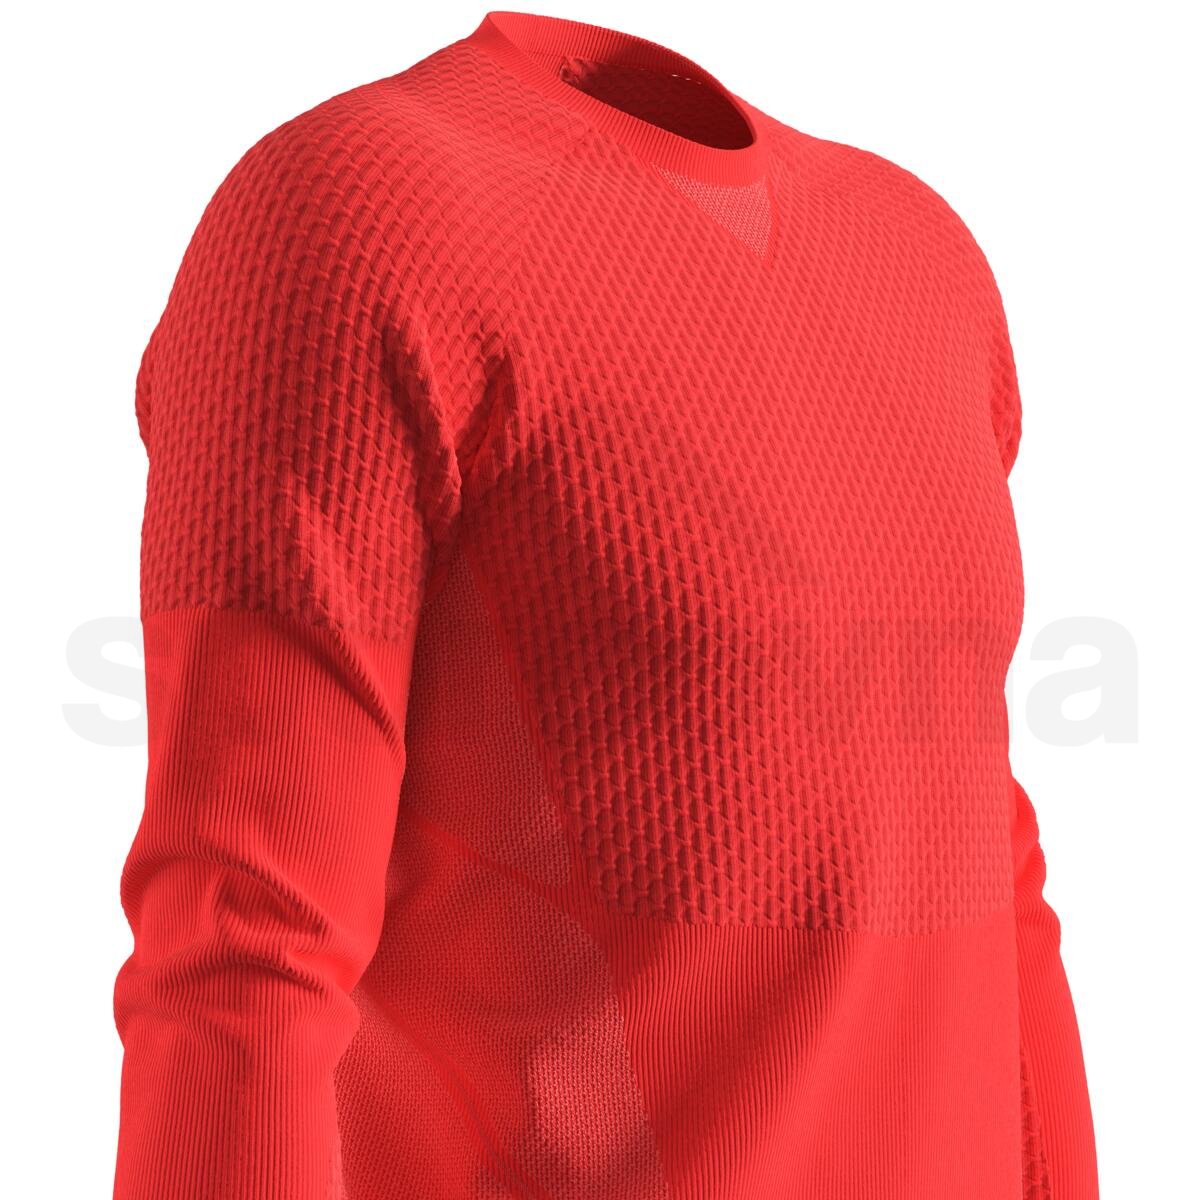 Tričko Salomon Sense LS Tee M - červená